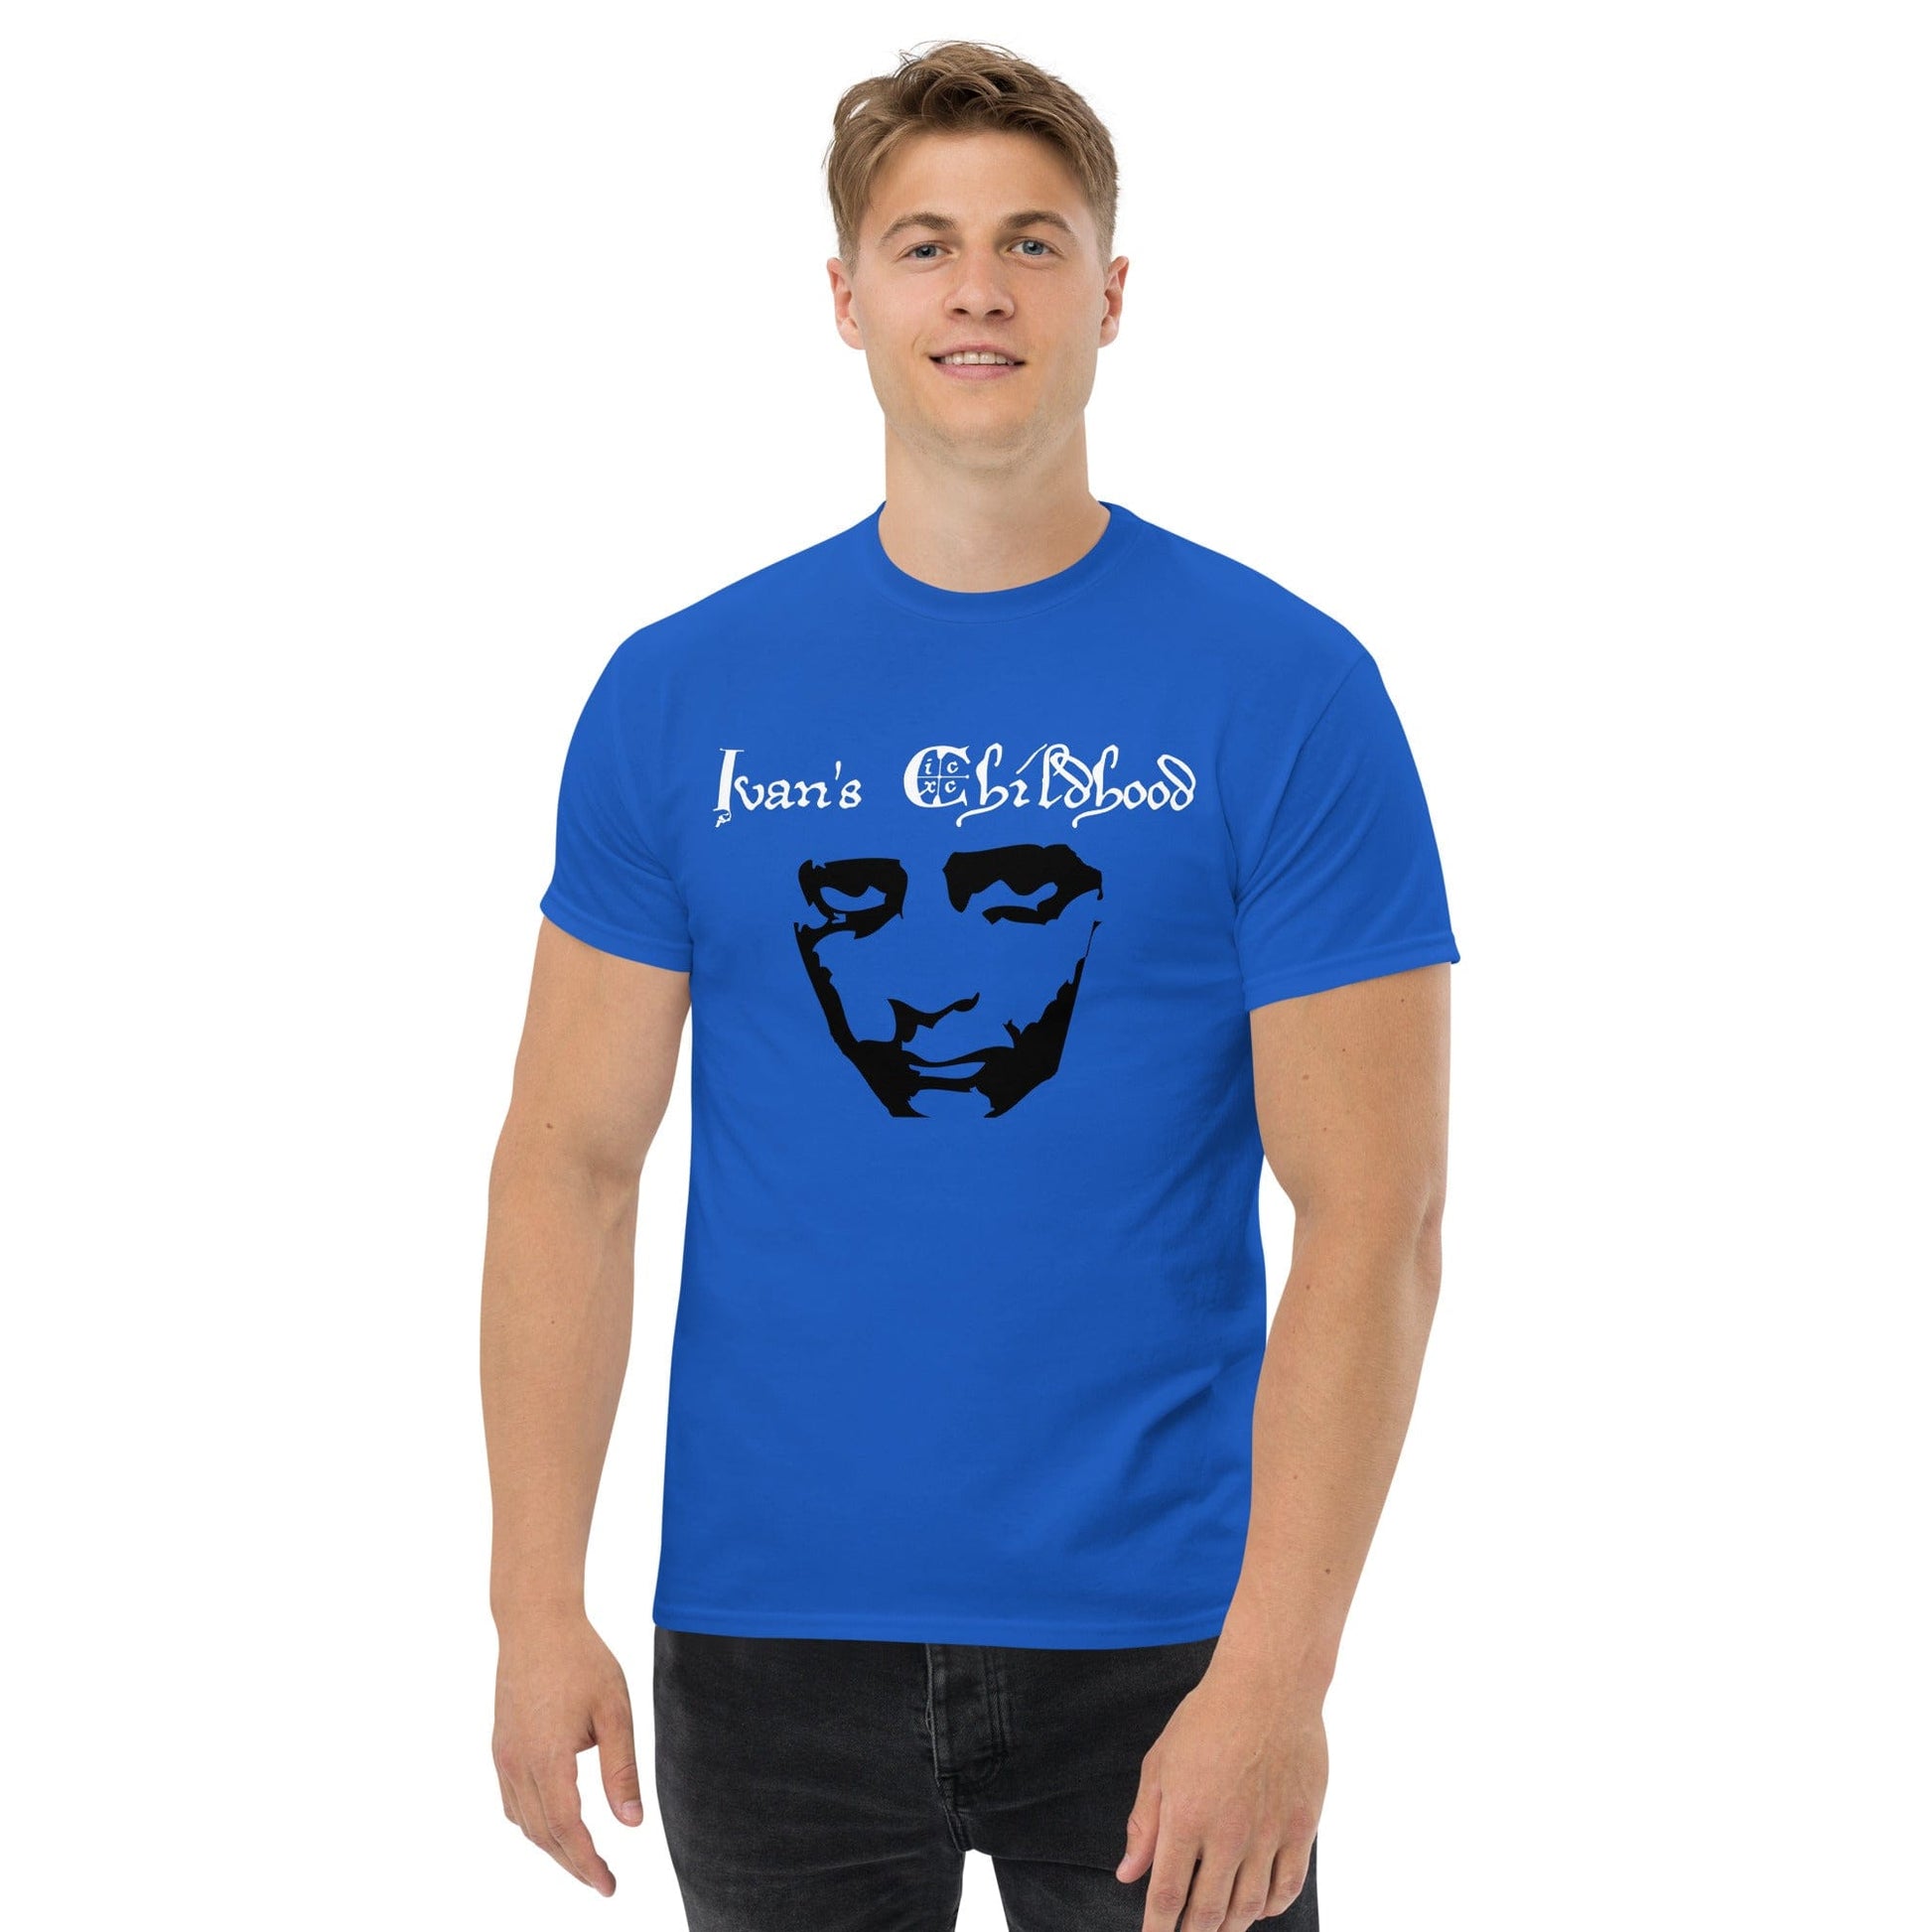 Ivan's Childhood Movie T-shirt